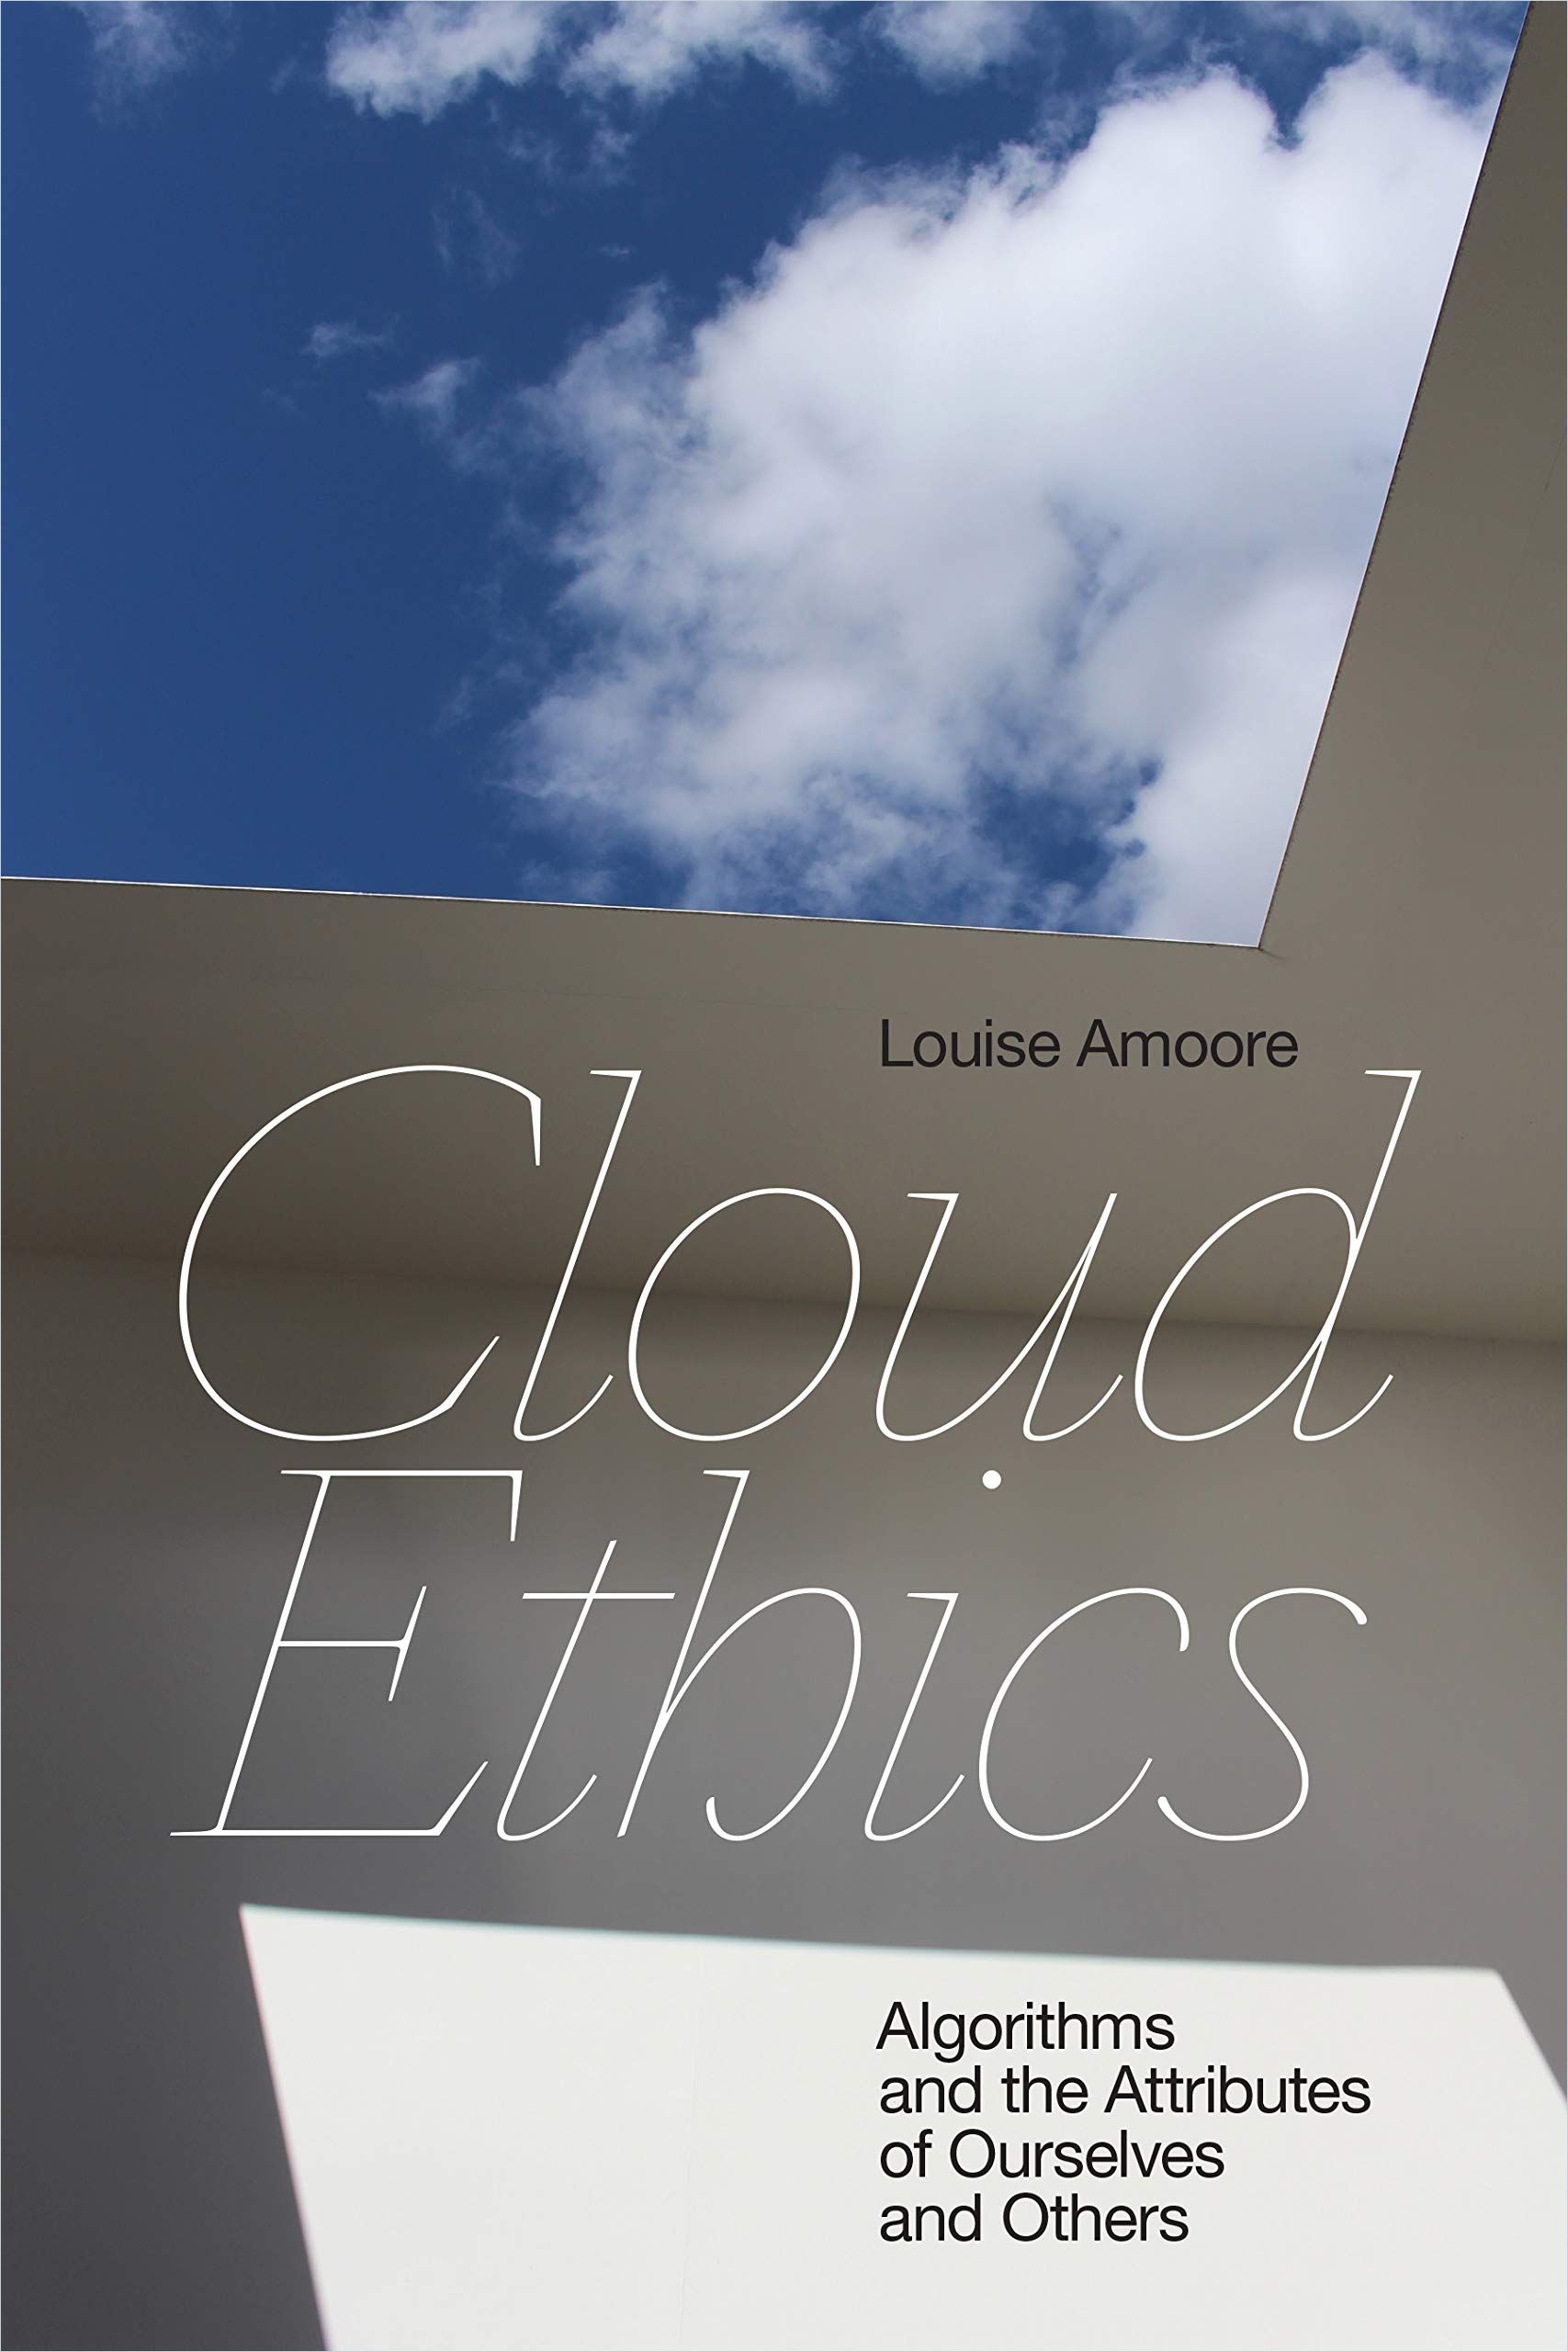 Image of: Cloud Ethics